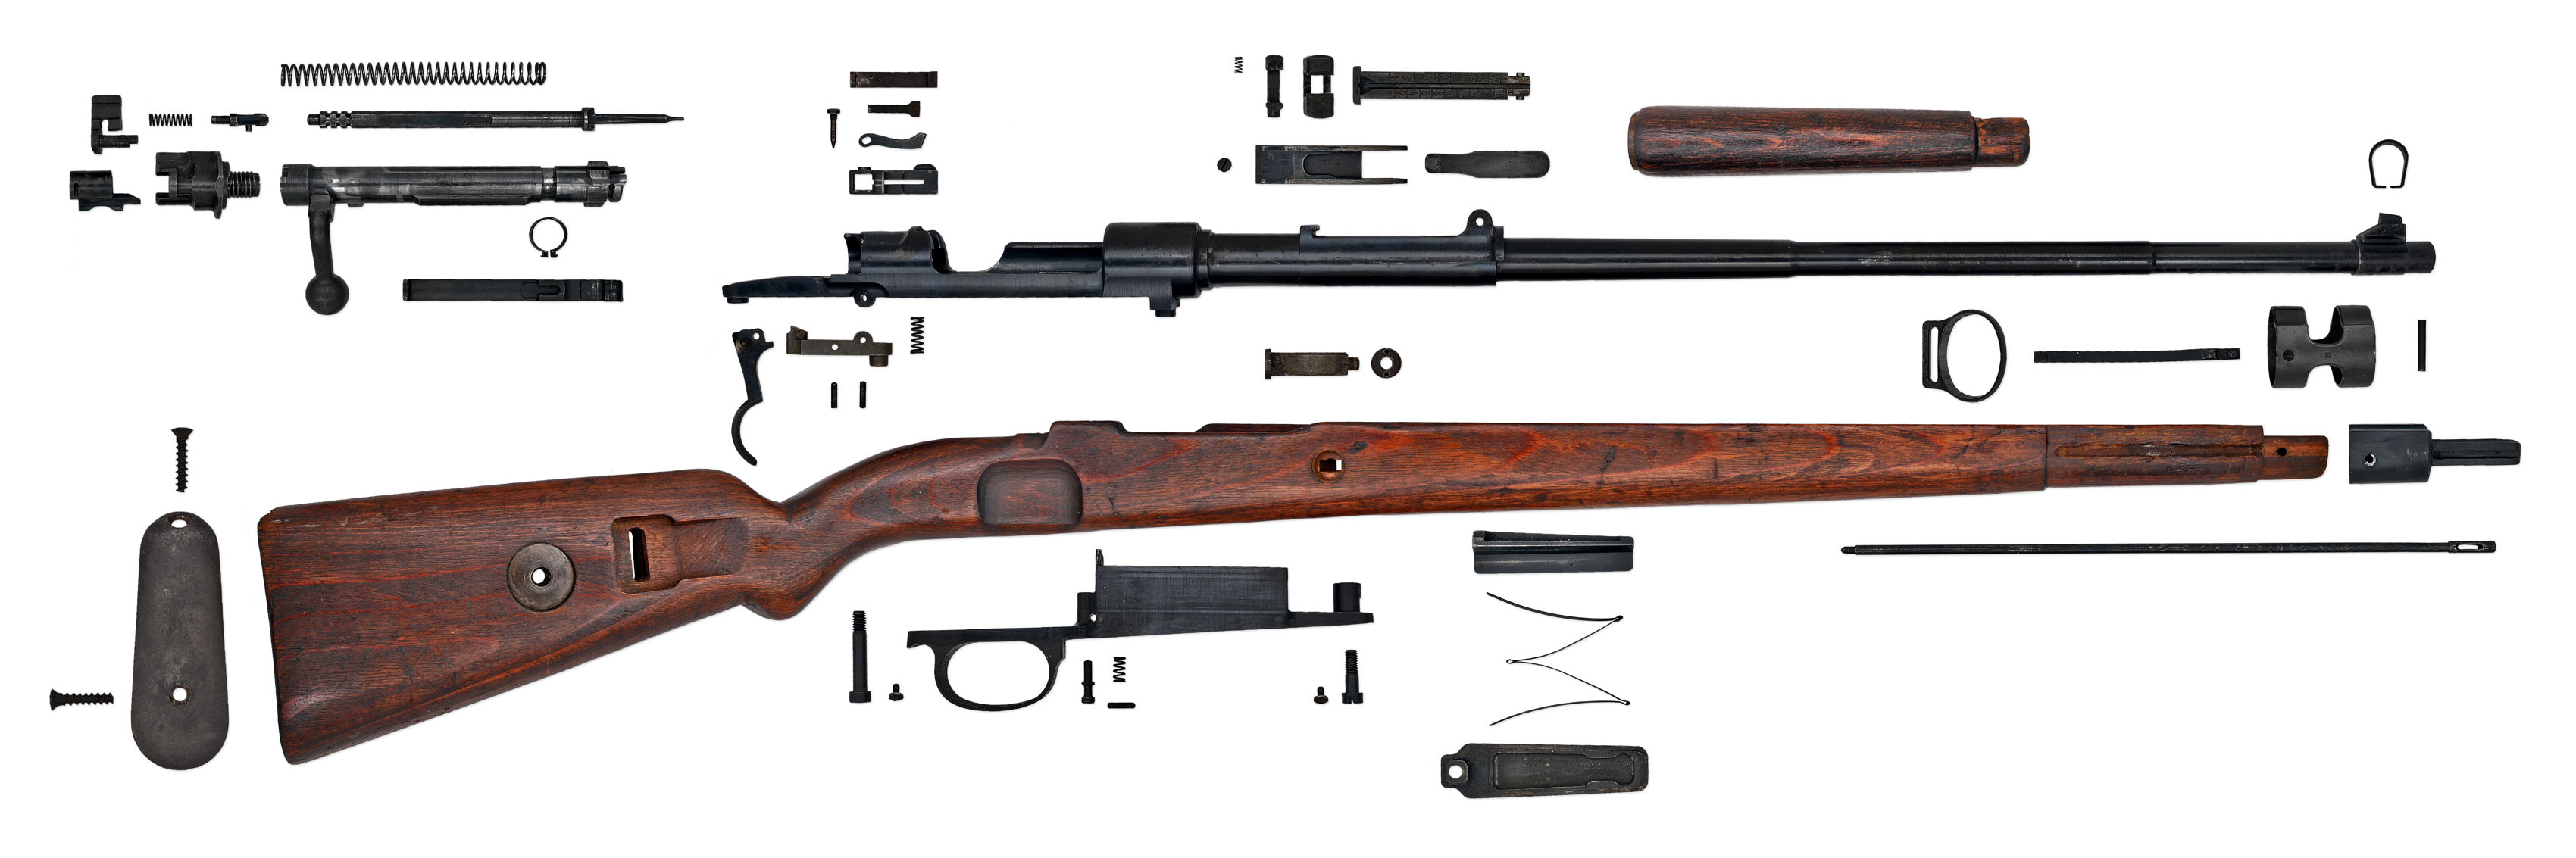 K98 Mauser Rifle #25